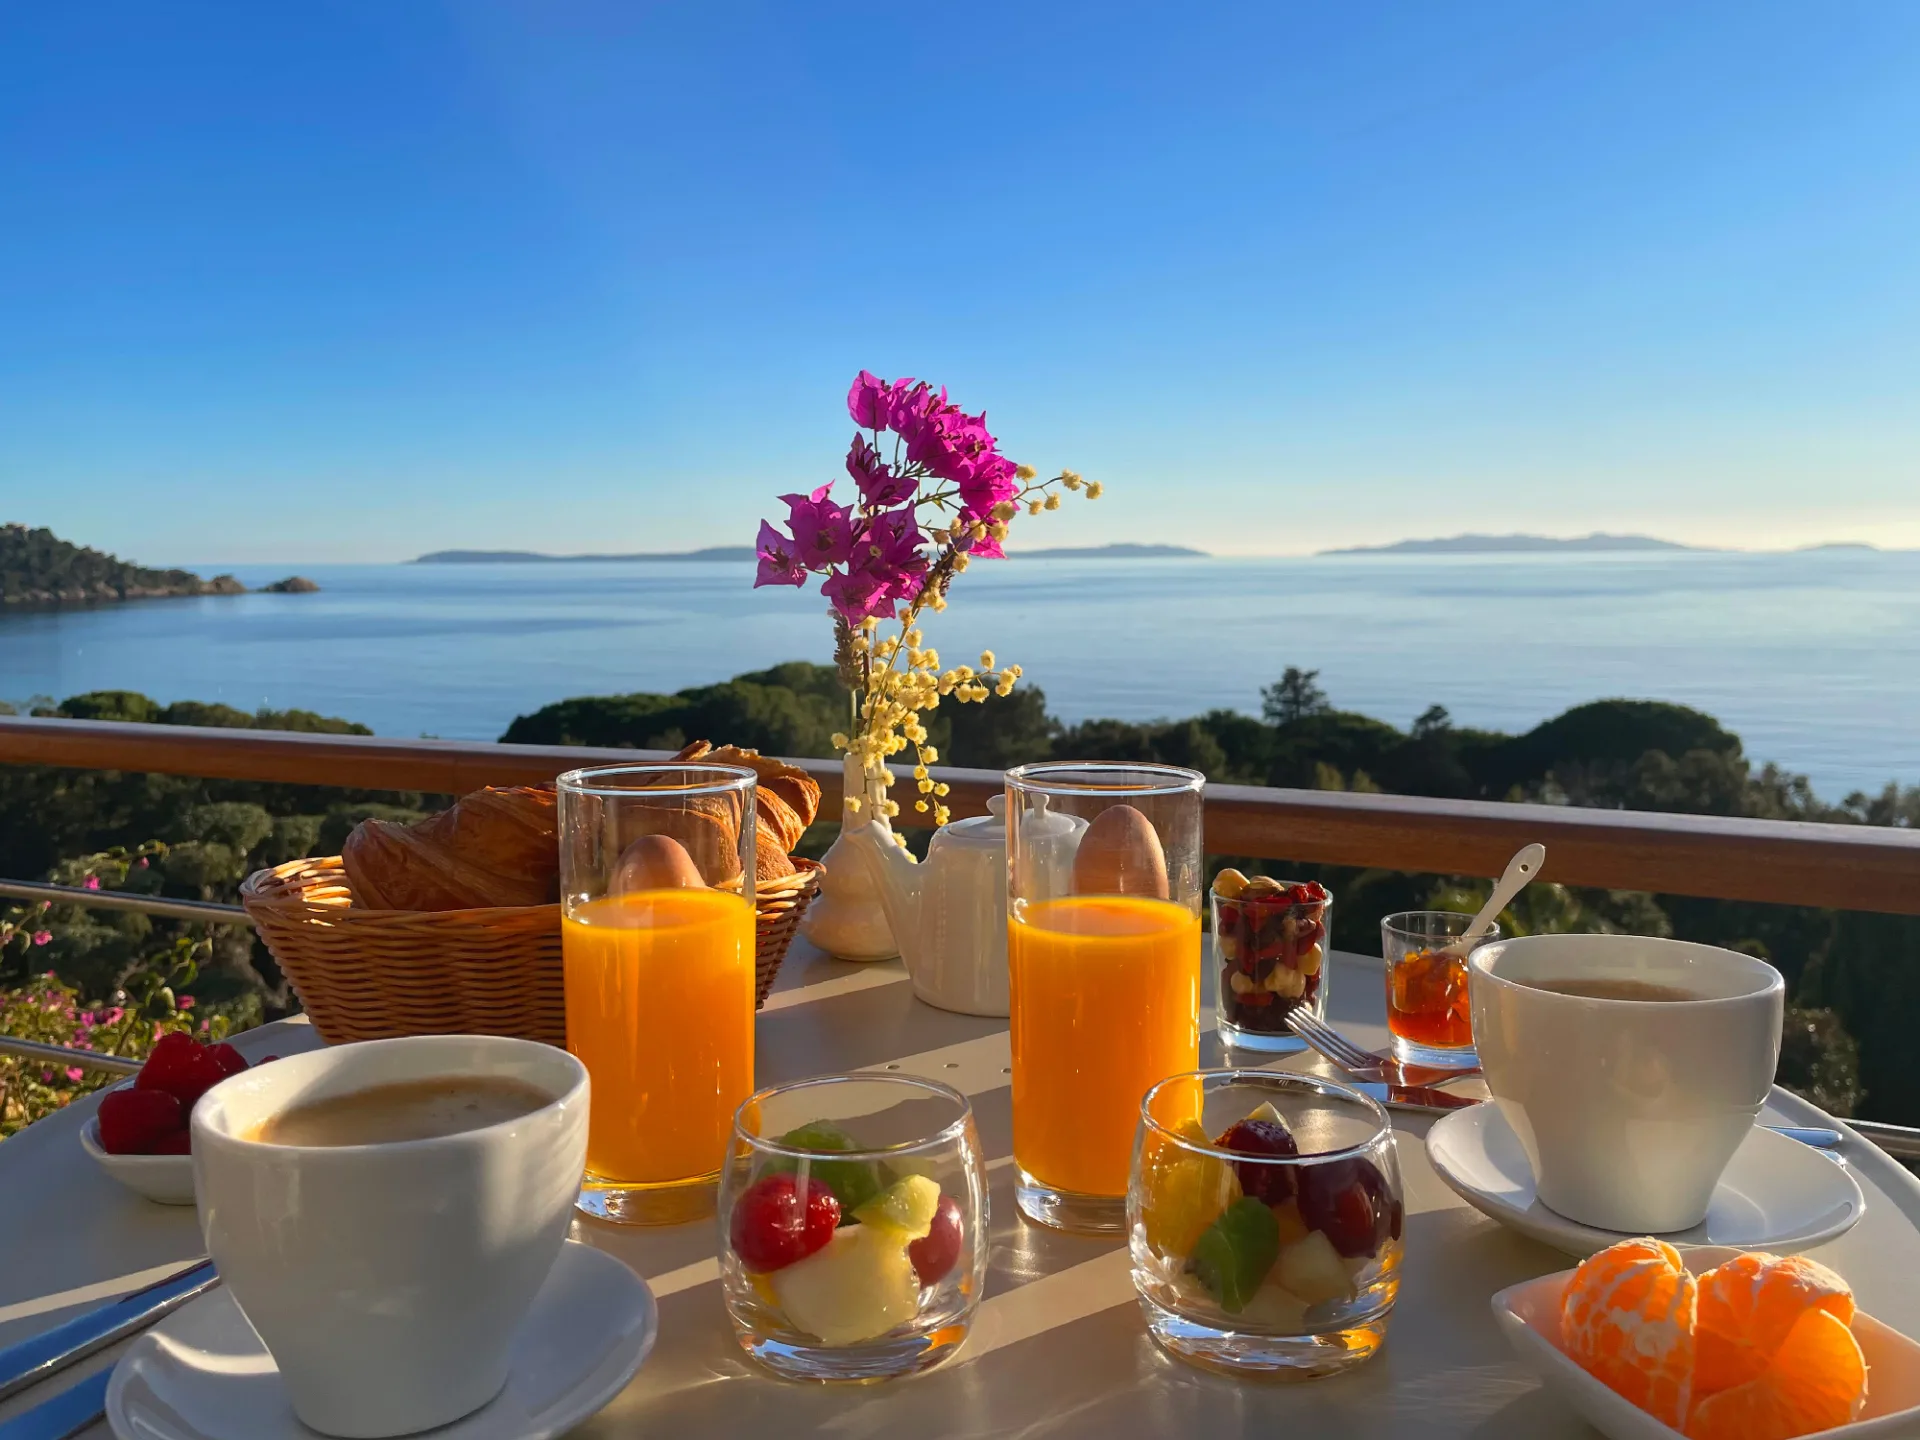 Le Lavandou hotel rental breakfast